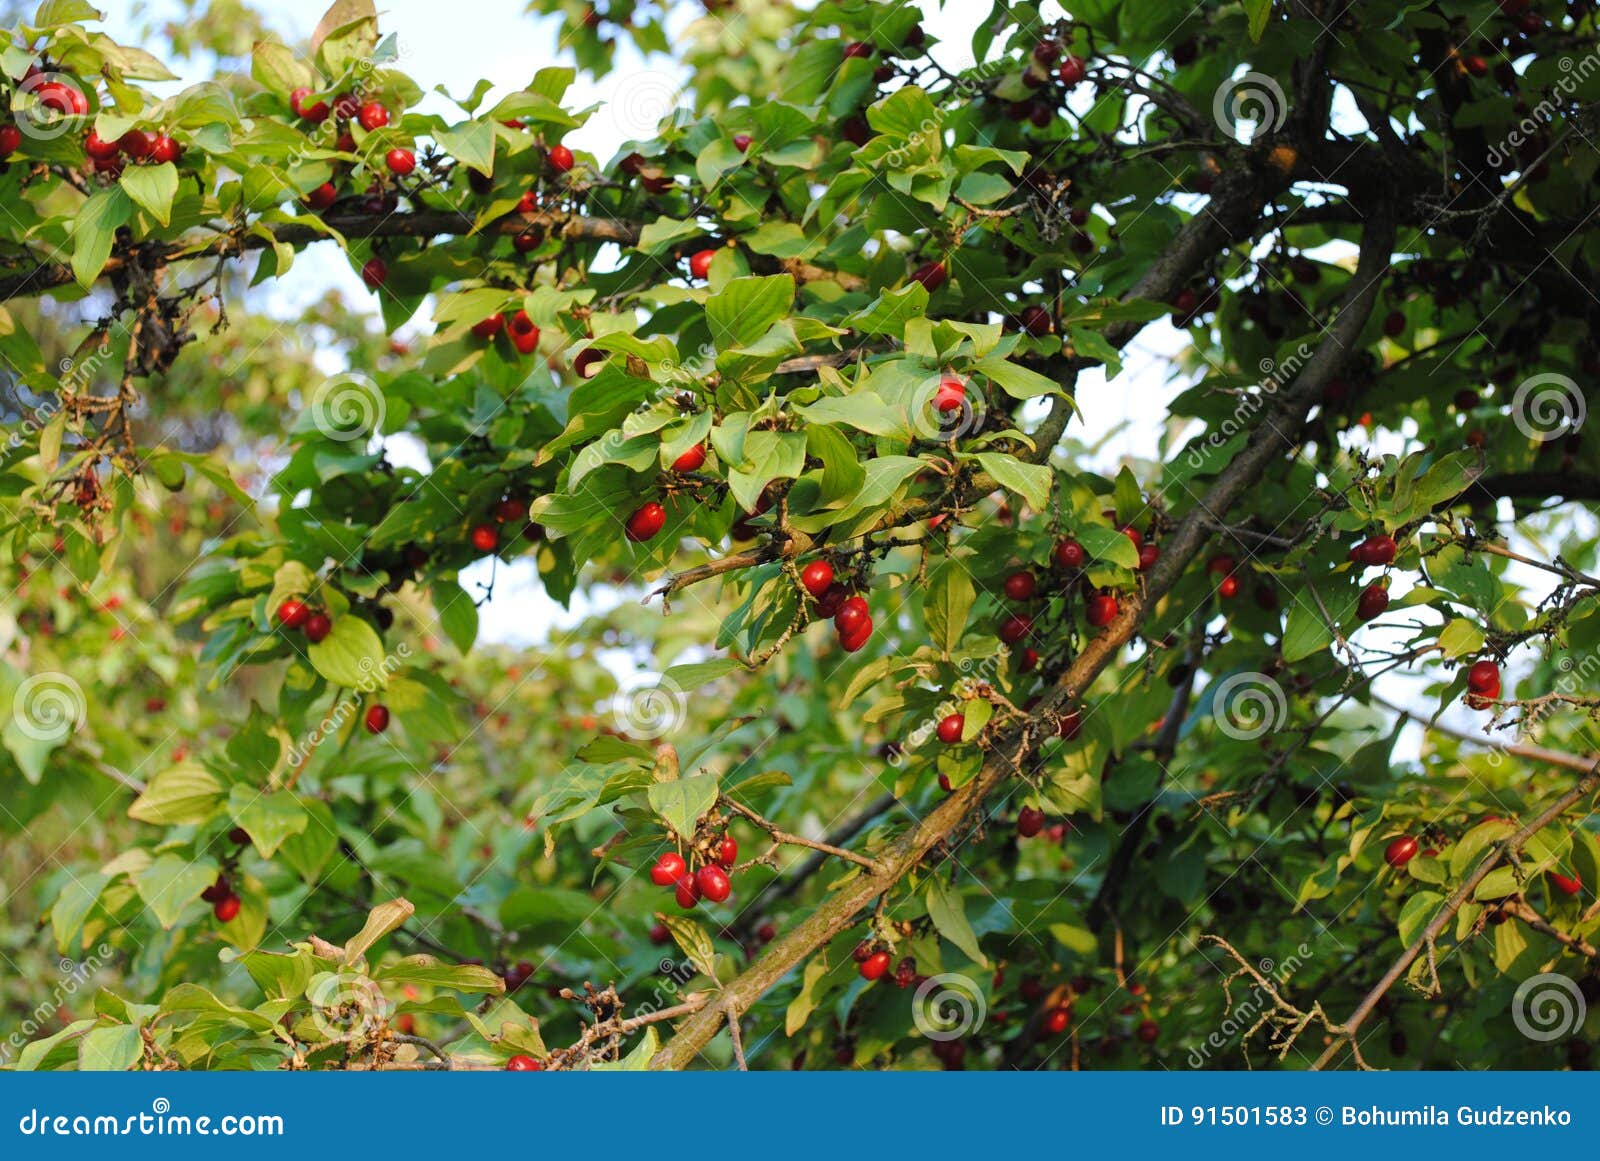 cornus mas - cornelian cherry, european cornel, cornelian cherry dogwood